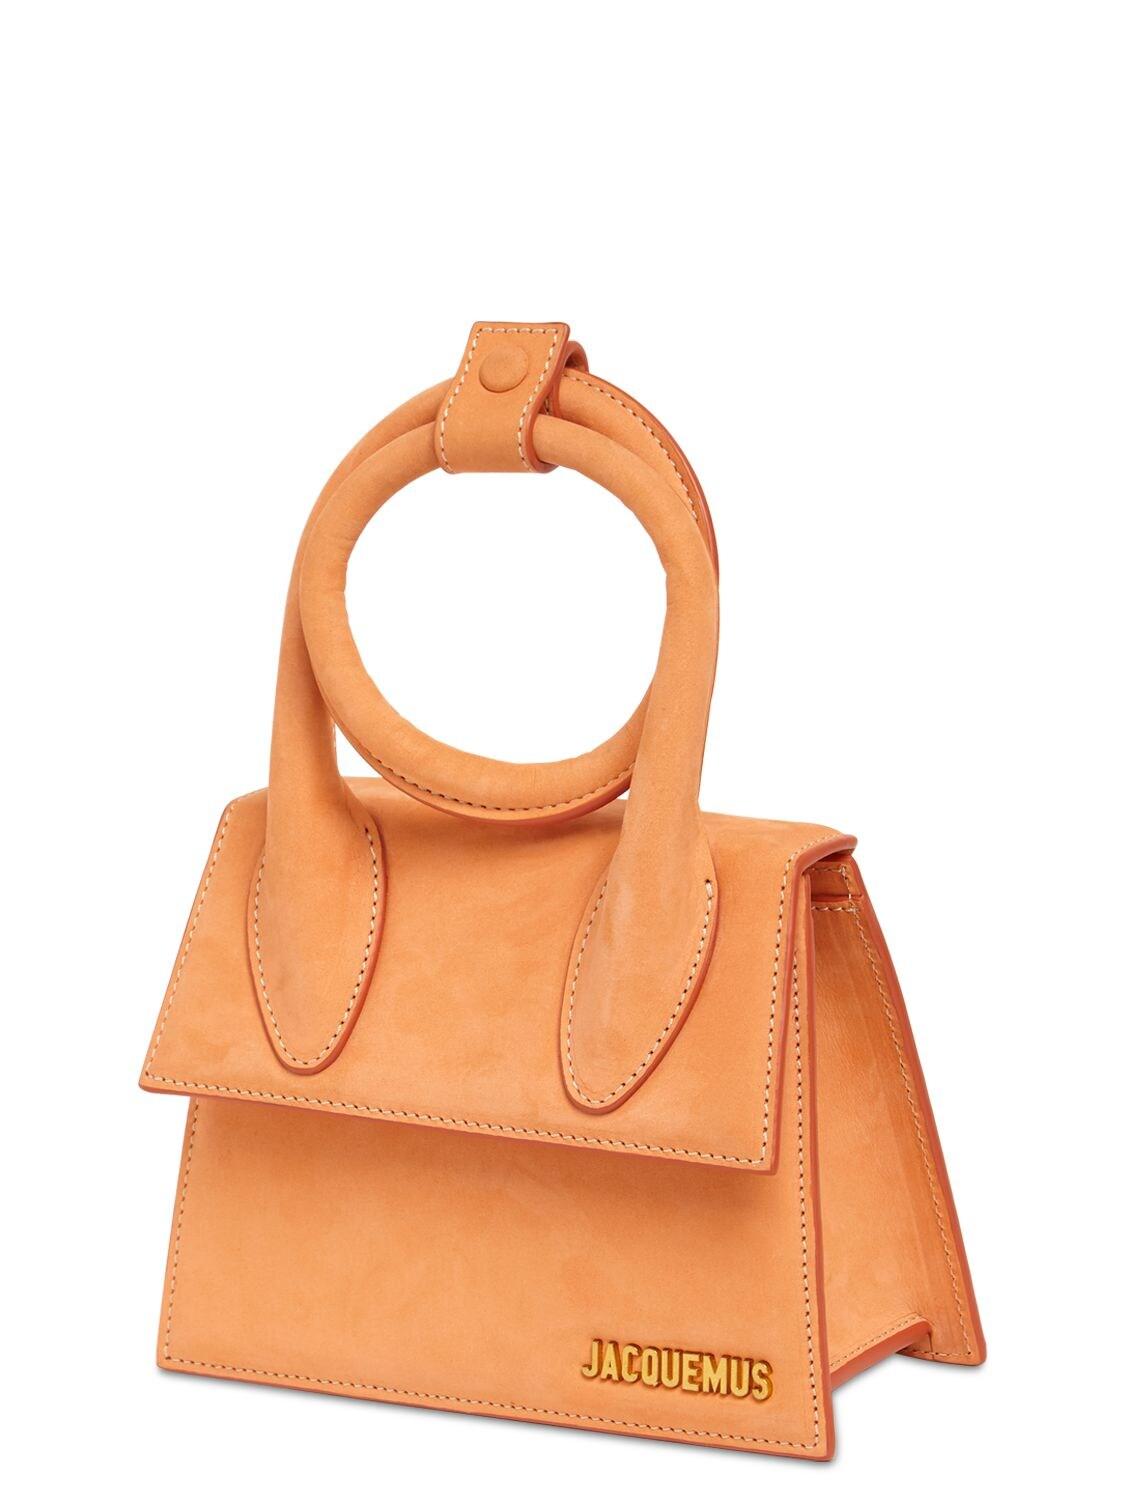 Jacquemus Le Chiquito Noeud Leather Bag in Orange | Lyst